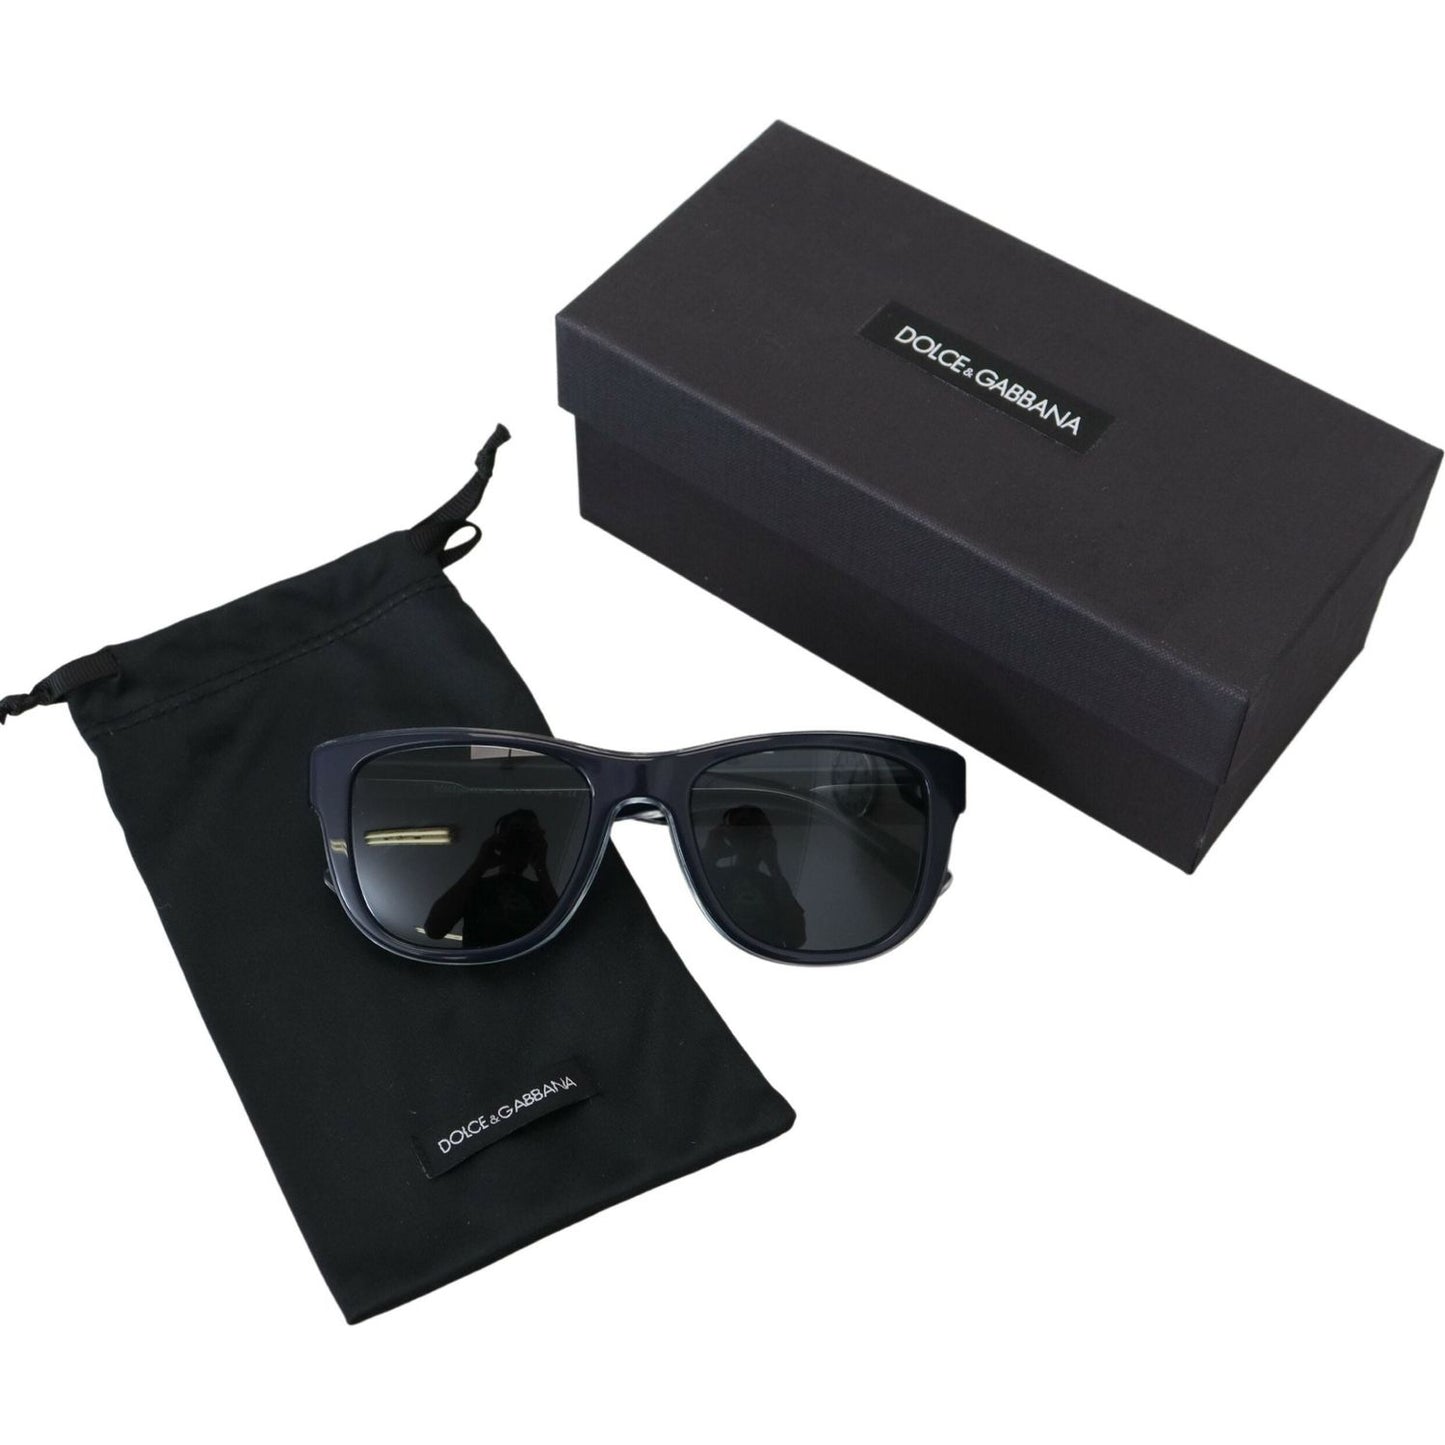 Dolce & GabbanaChic Blue Acetate Designer SunglassesMcRichard Designer Brands£169.00